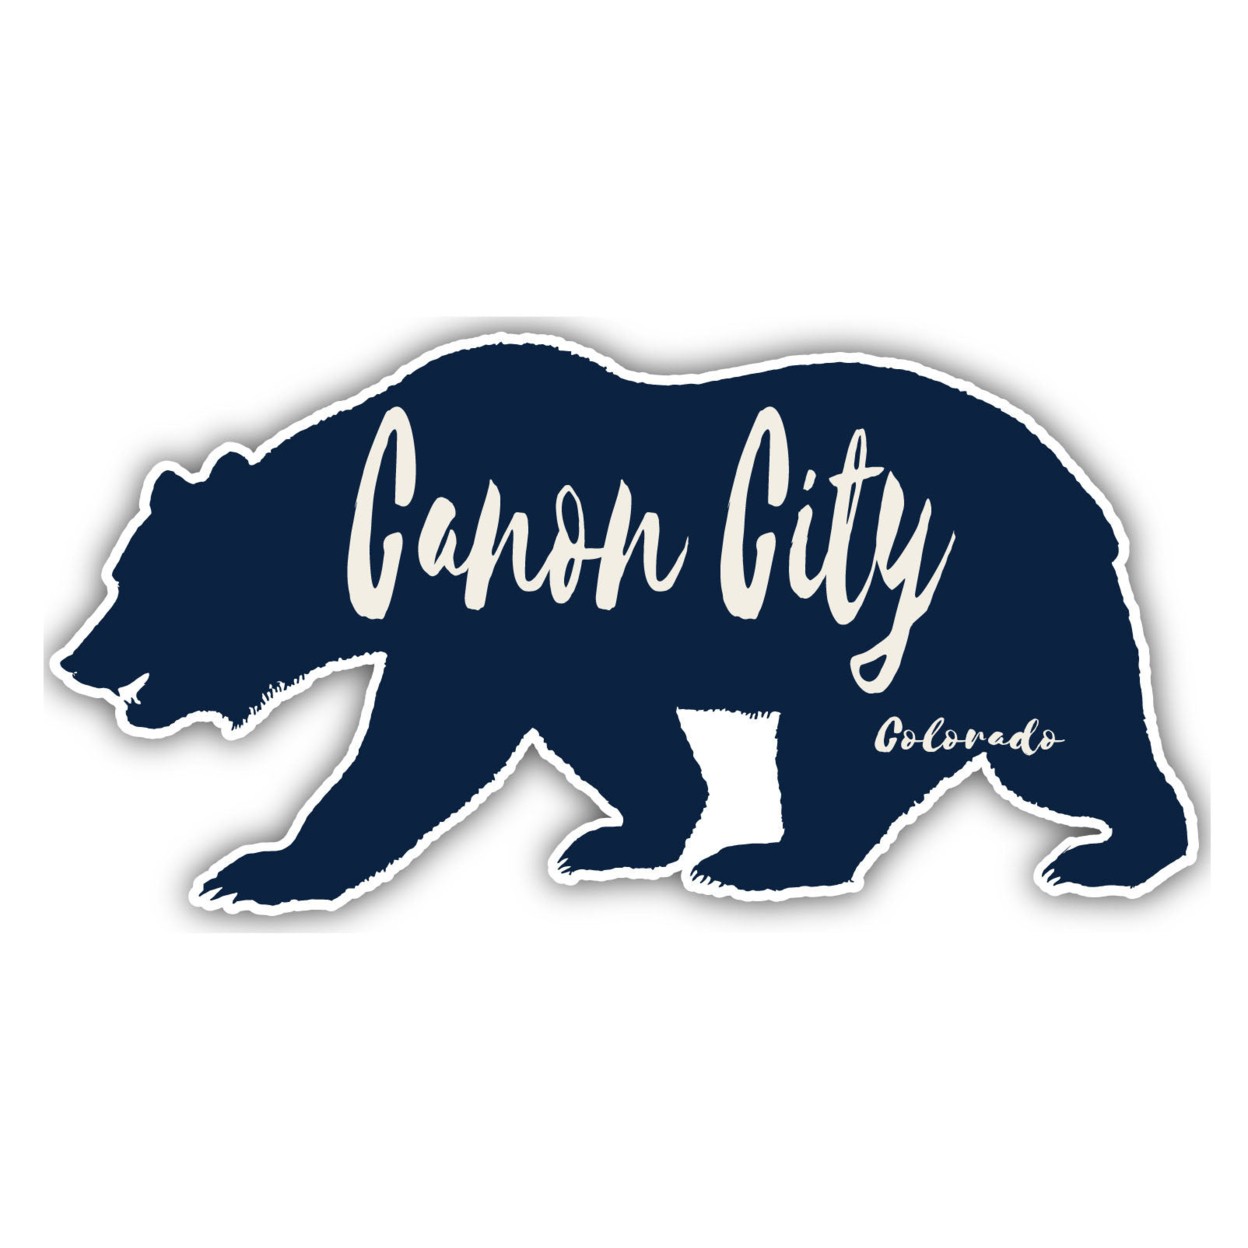 Canon City Colorado Souvenir Decorative Stickers (Choose Theme And Size) - Single Unit, 4-Inch, Tent